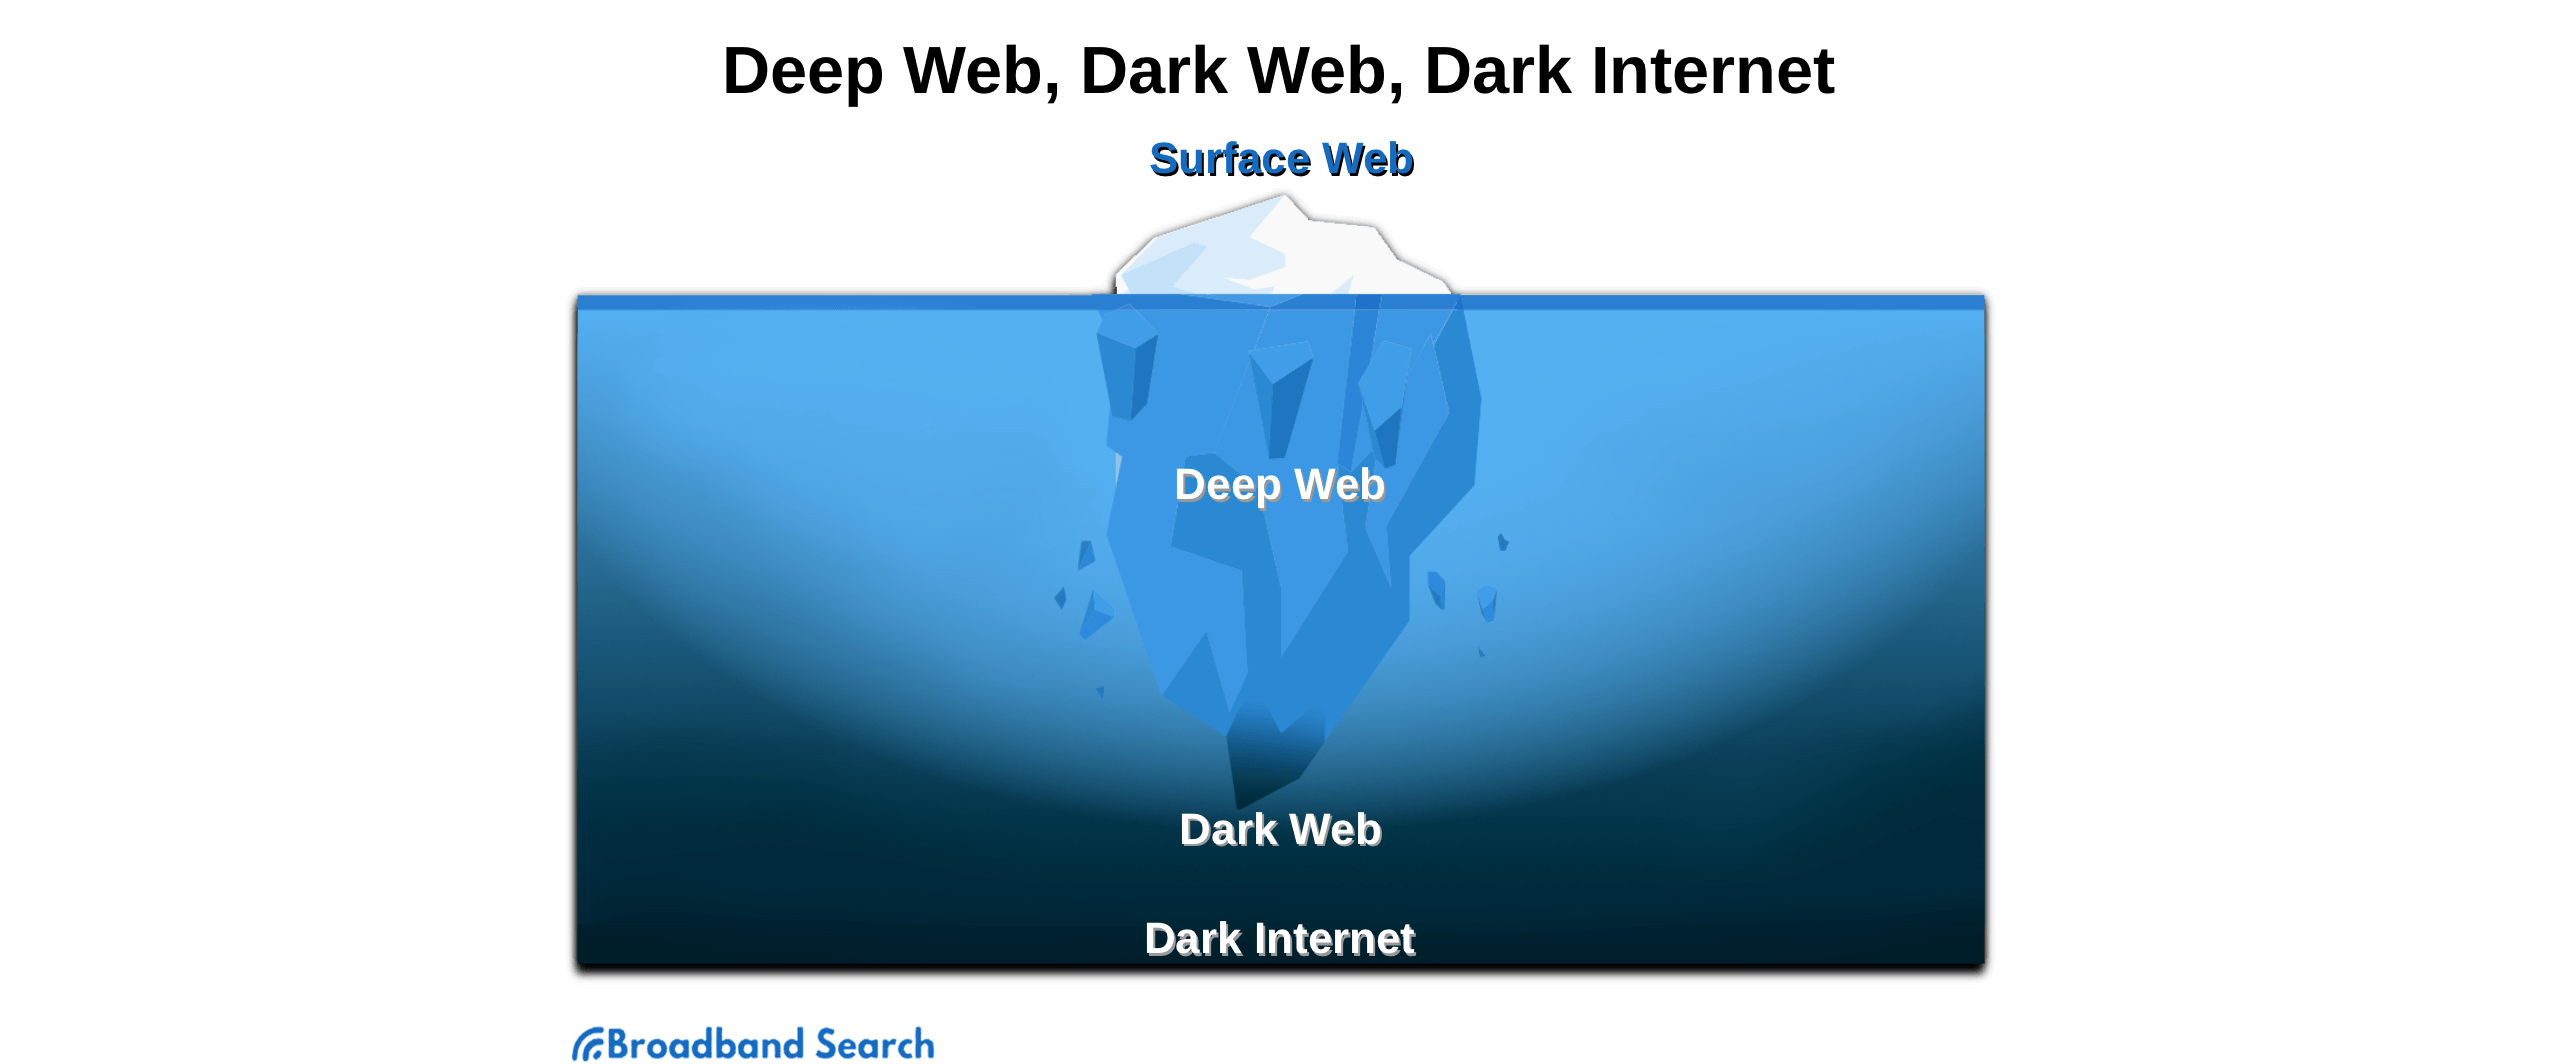 Deep web, Dark Web and Deep Internet illustration